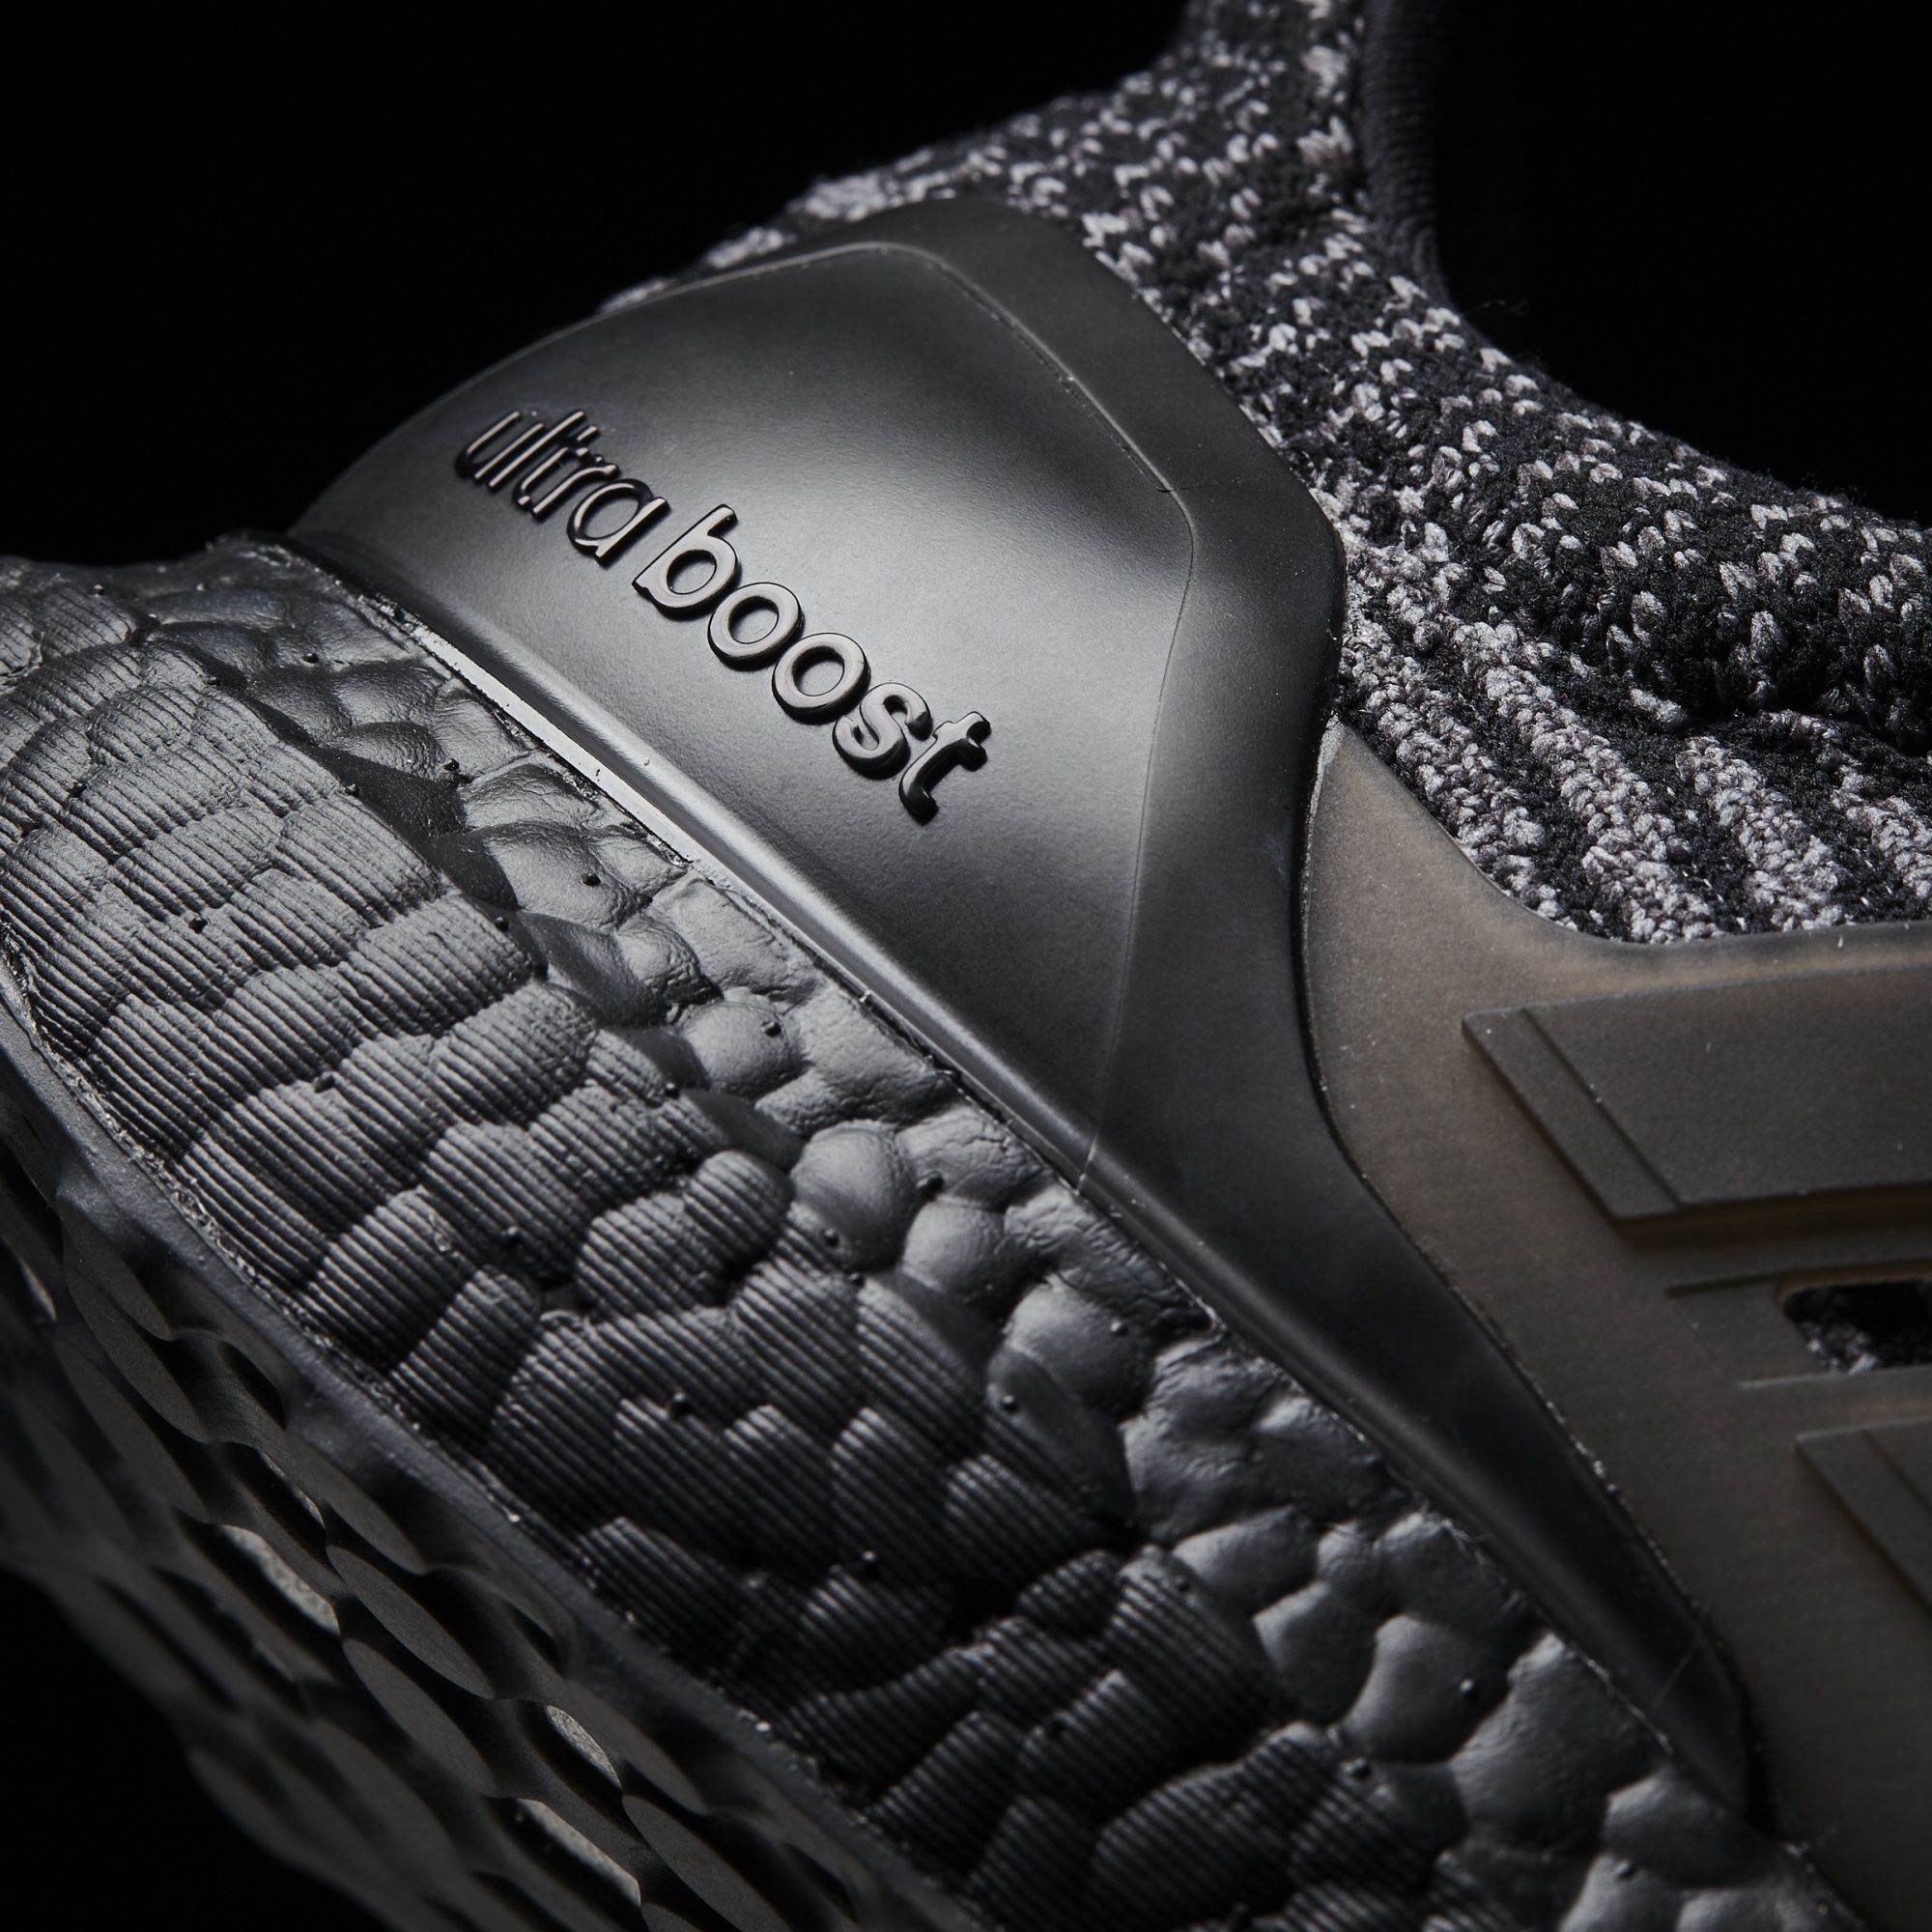 Adidas Ultra Boost
Core Black / Grey